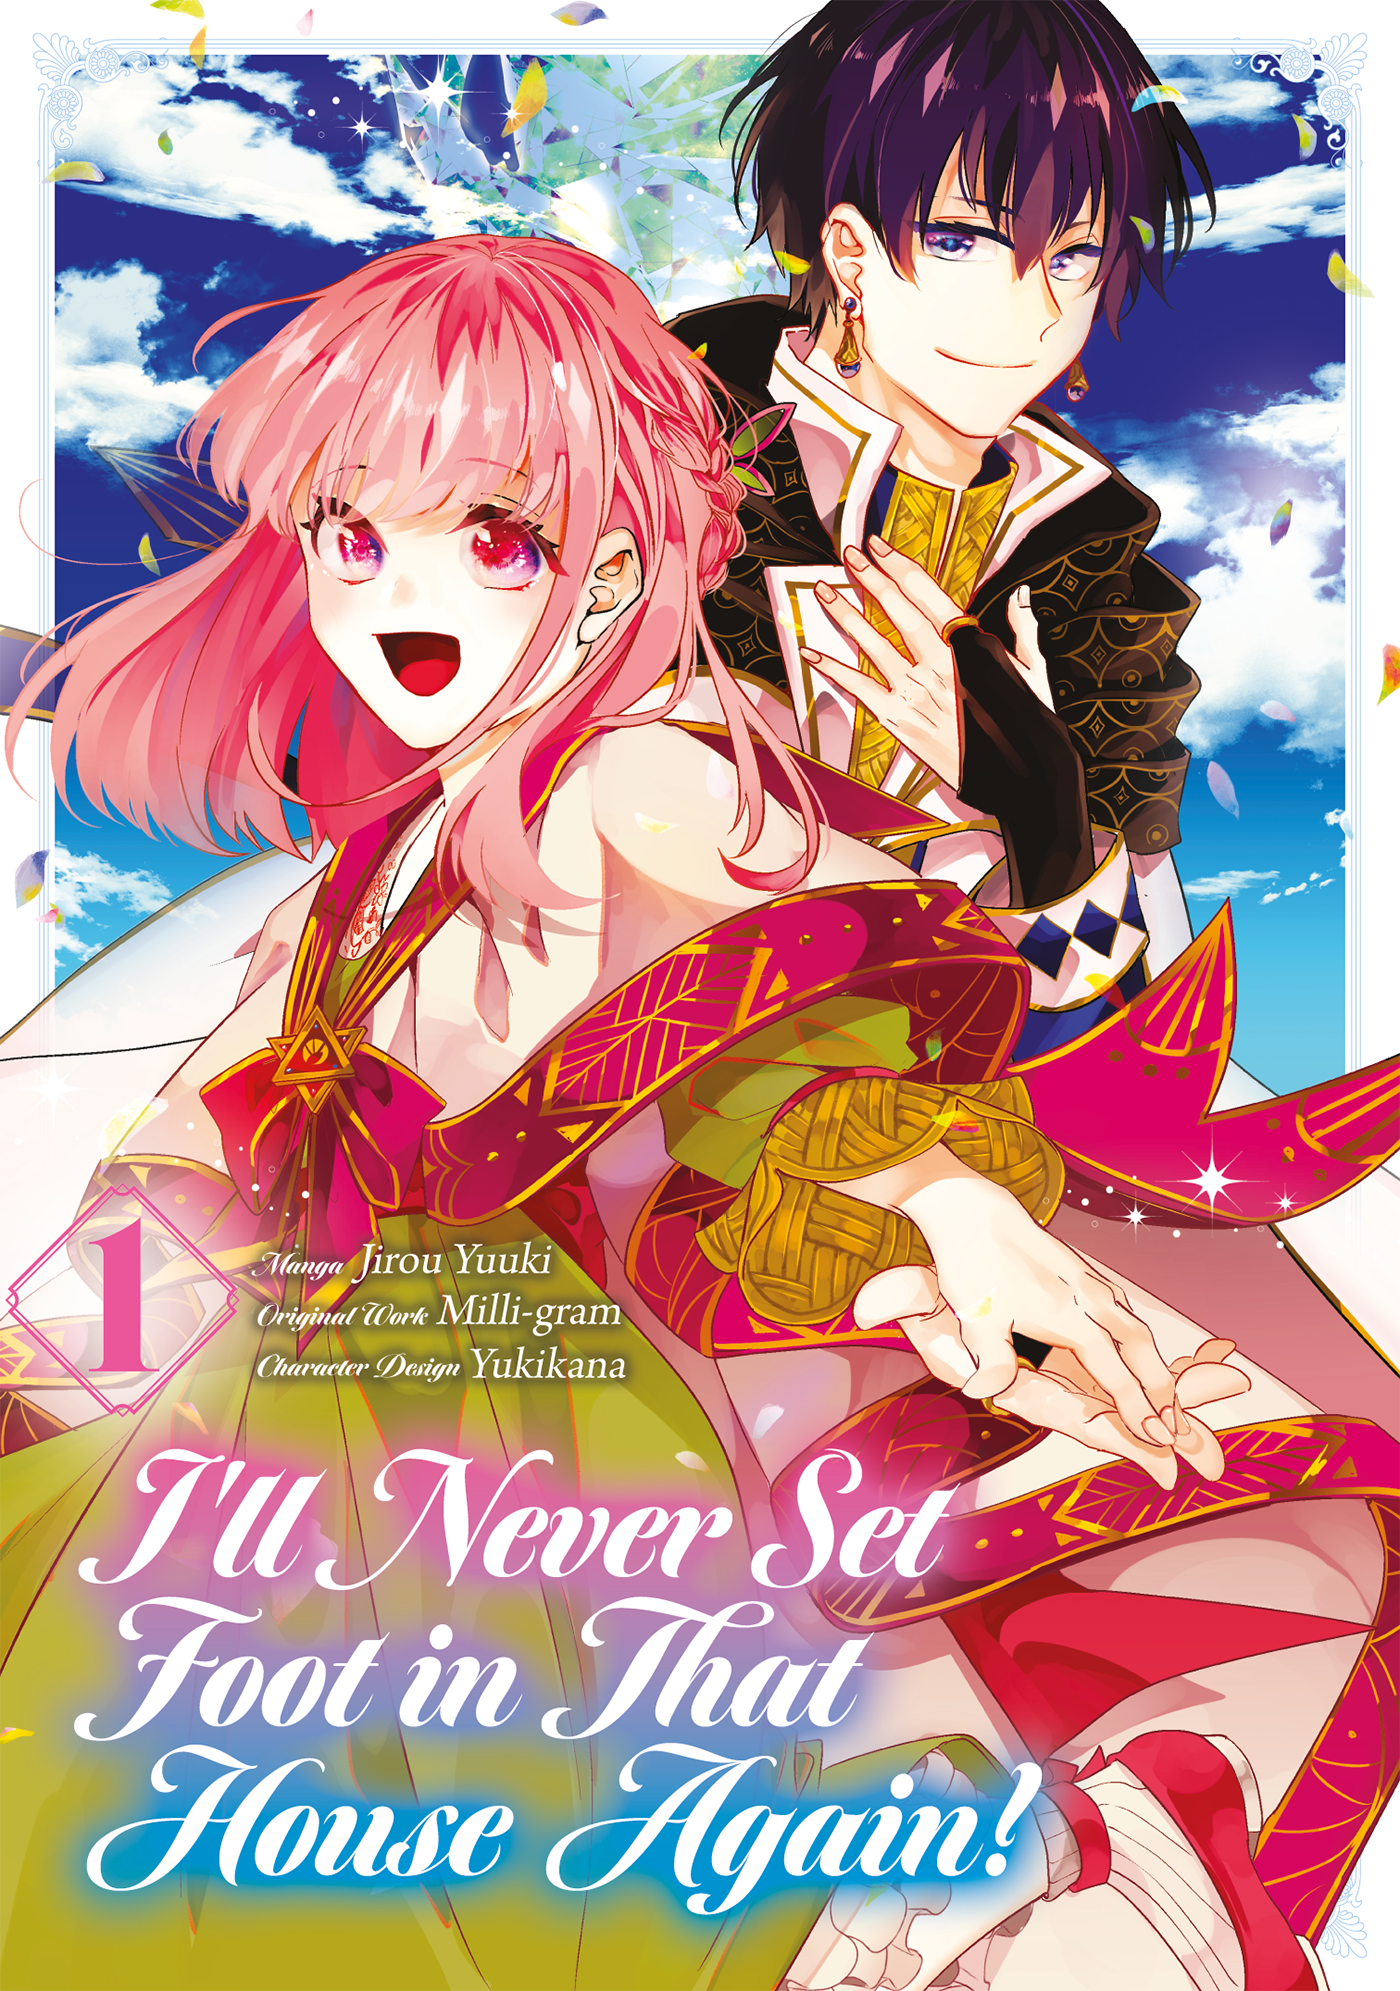 I’ll Never Set Foot in That House Again! (Manga) by Jirou Yuuki (Art), Milli-gram (Story), Yukikana (Character Designs)